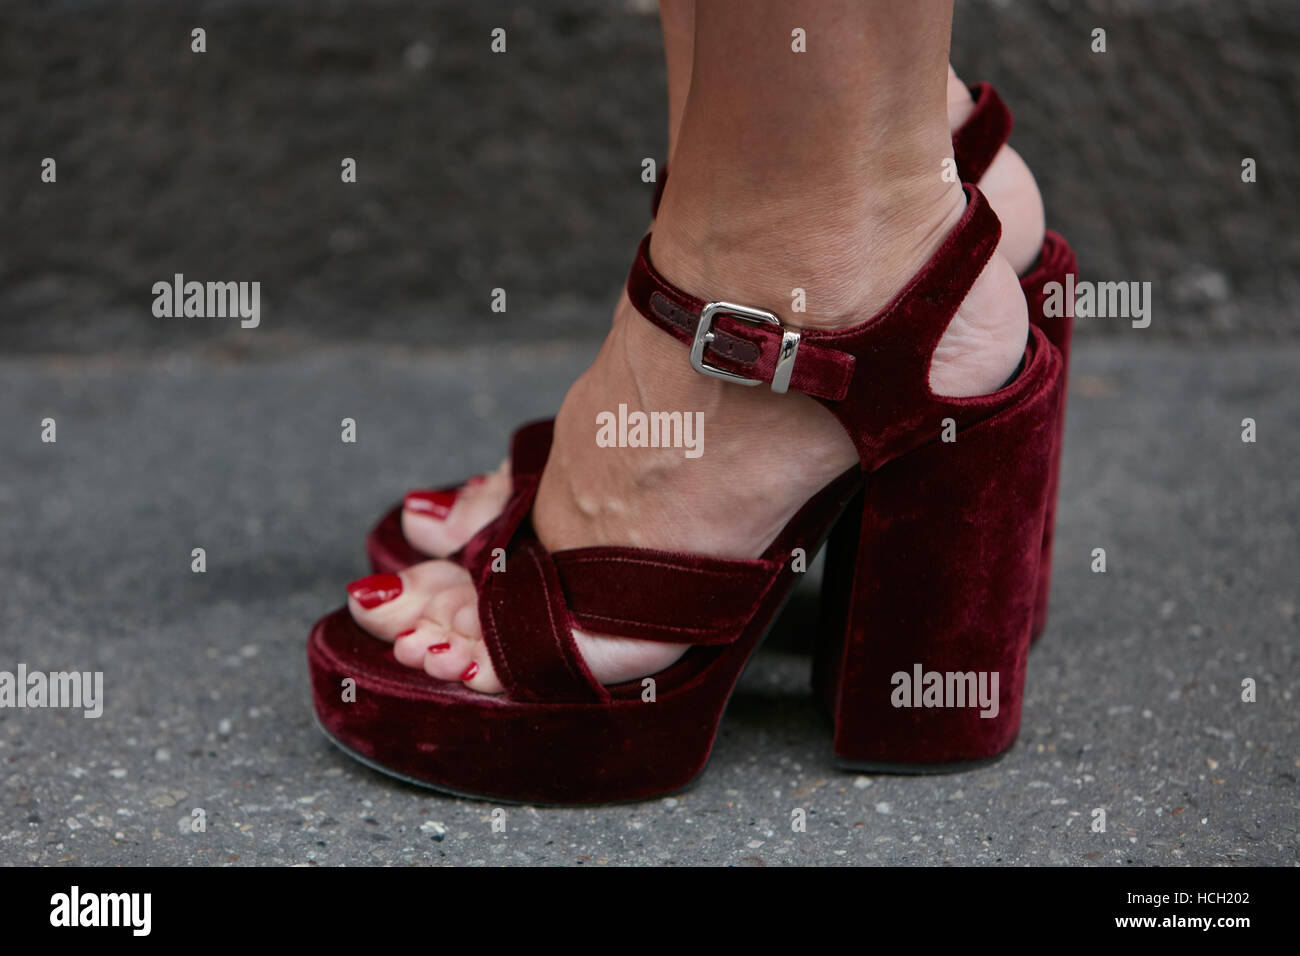 red velvet sandals heels